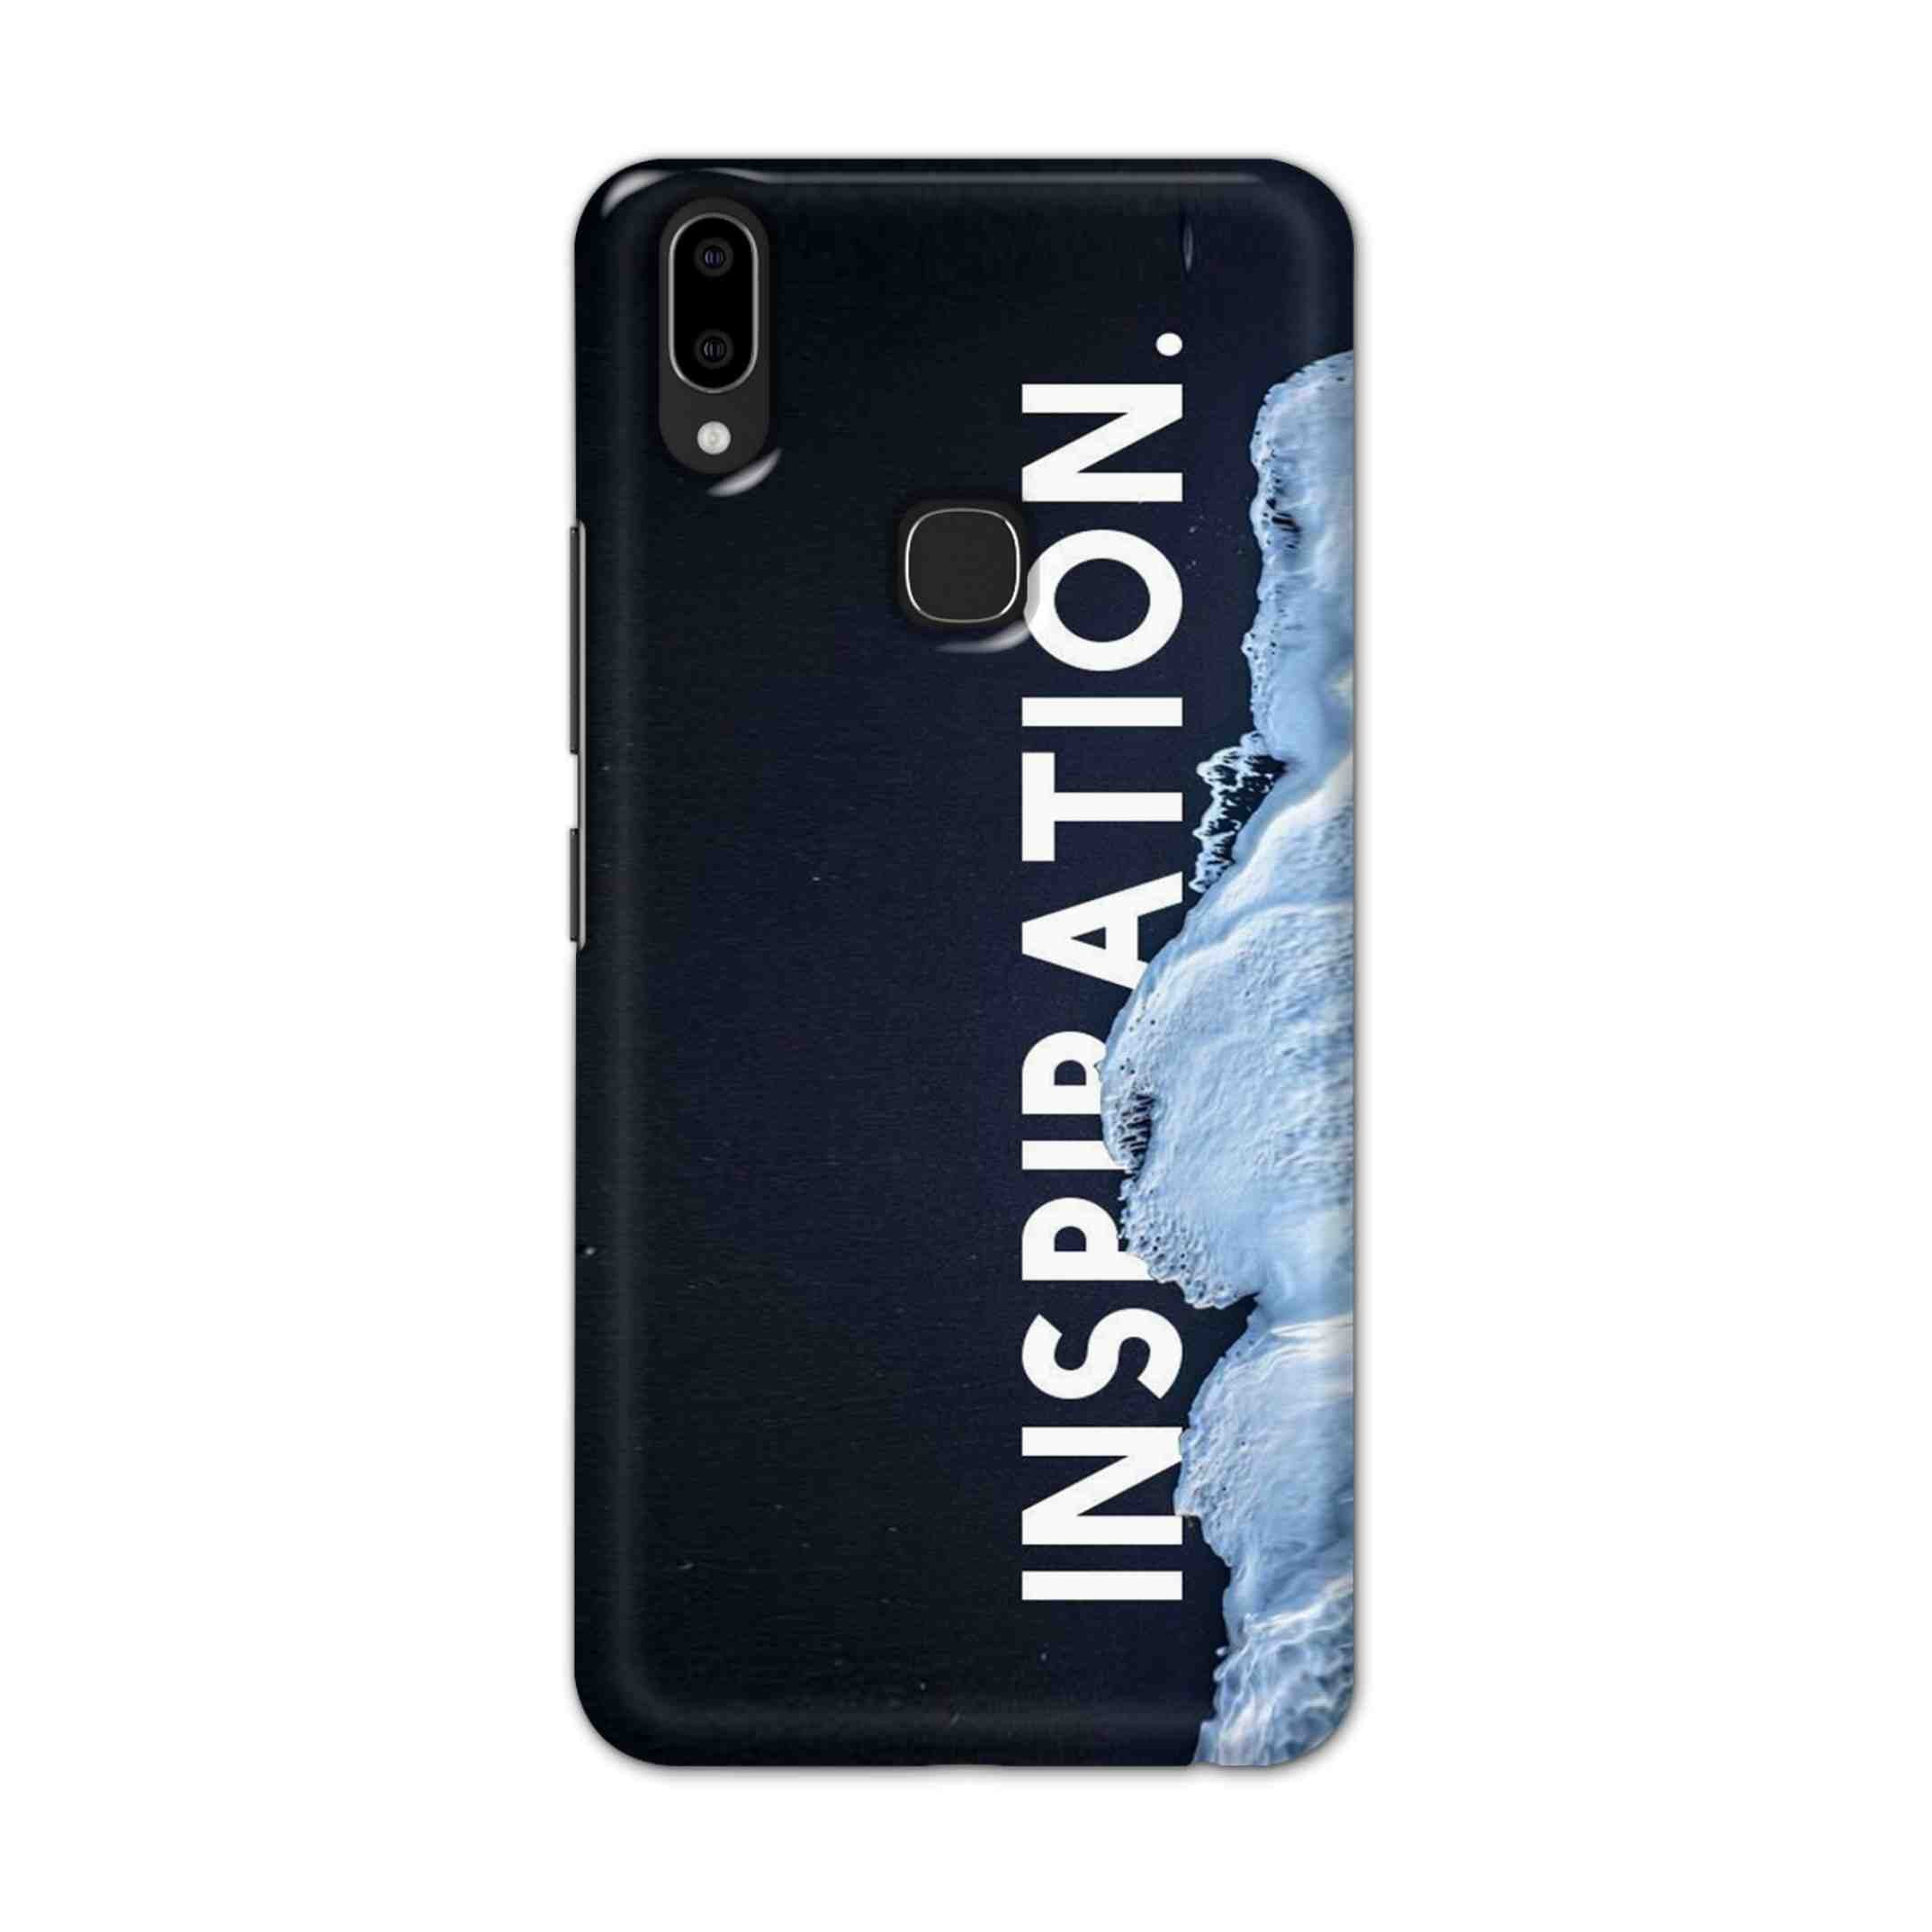 Buy Inspiration Hard Back Mobile Phone Case Cover For Vivo V9 / V9 Youth Online